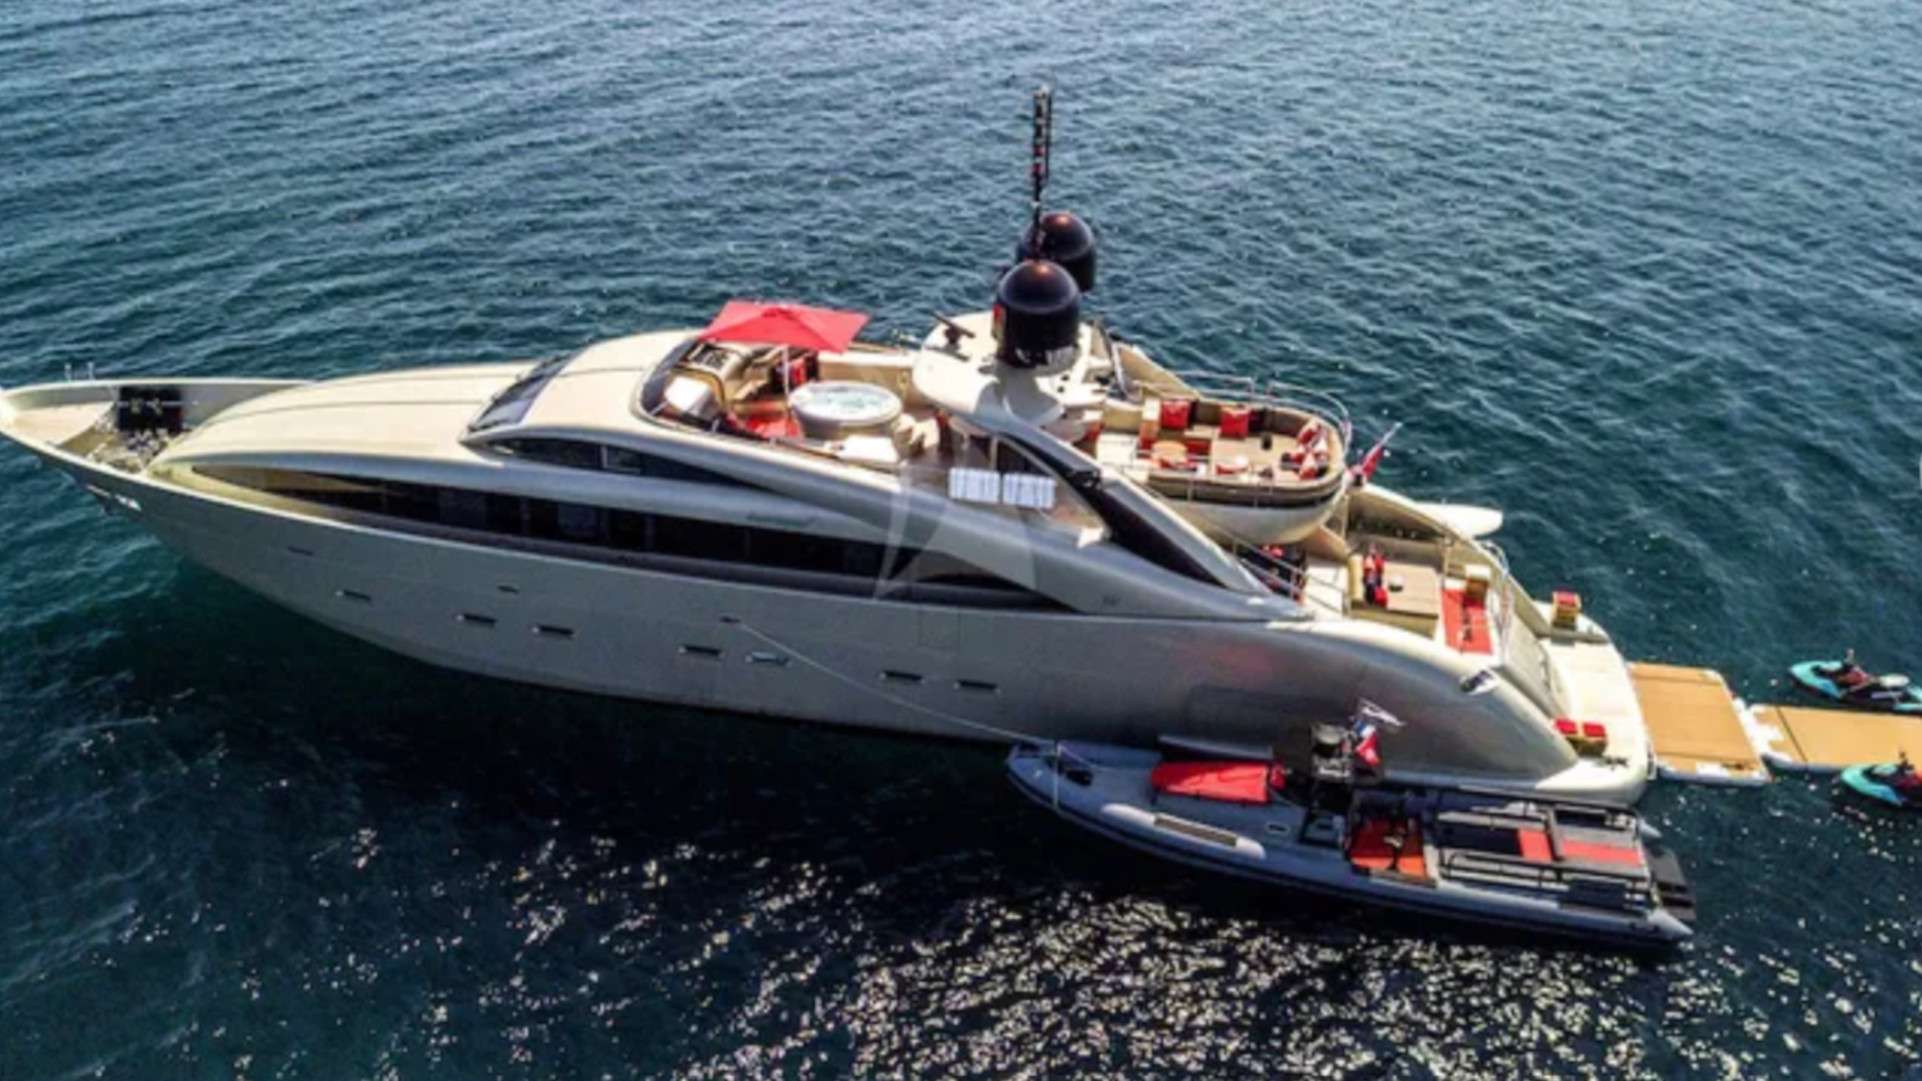 YCM 120 - Yacht Charter Menorca & Boat hire in Riviera, Corsica, Sardinia, Spain, Balearics, Caribbean 1